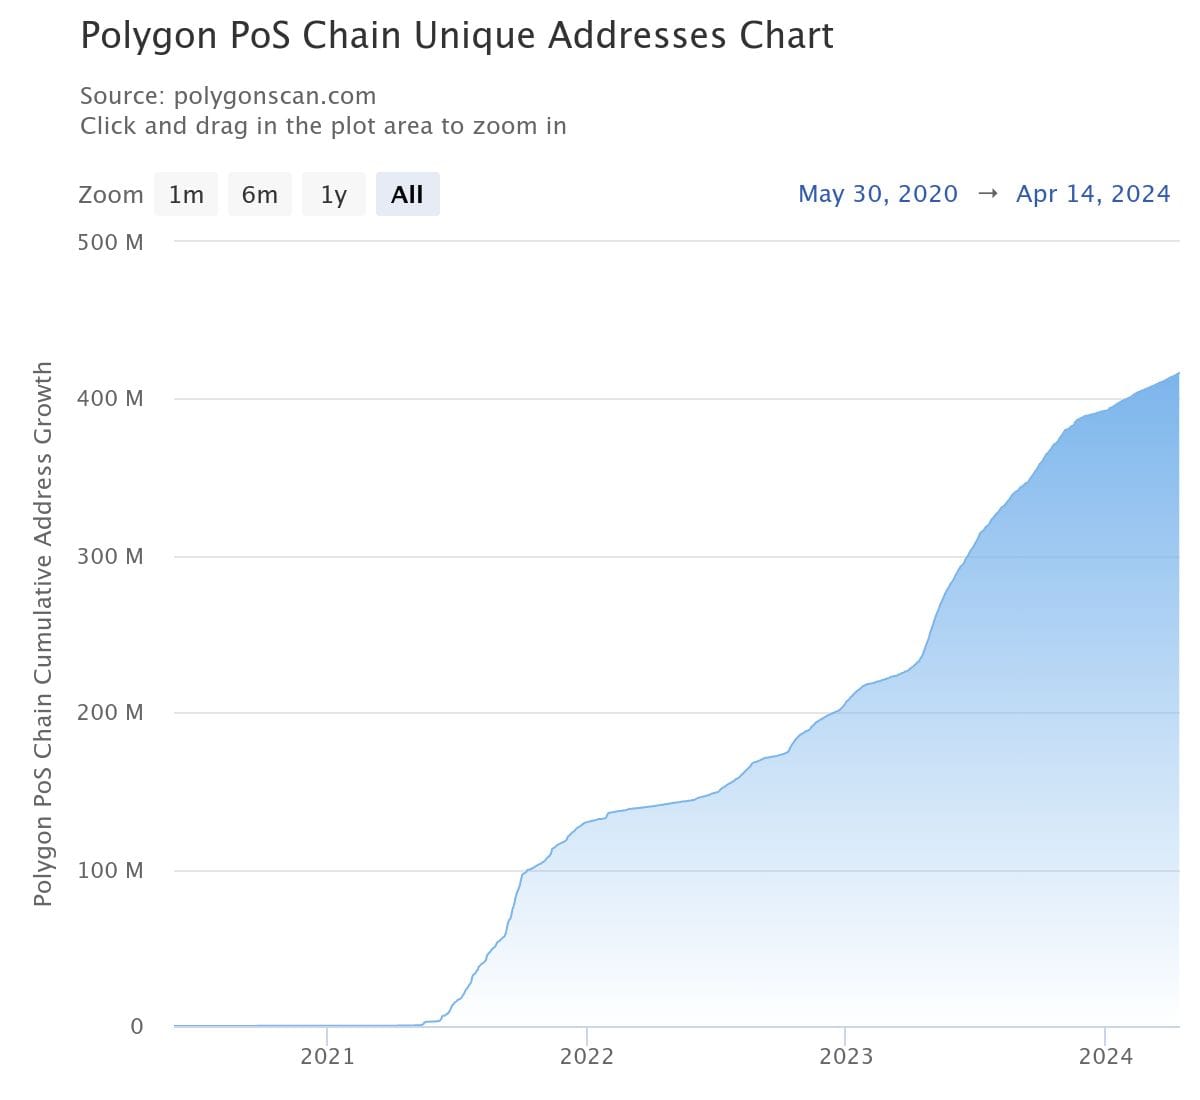 Total Unique Addresses on Polygon PoS